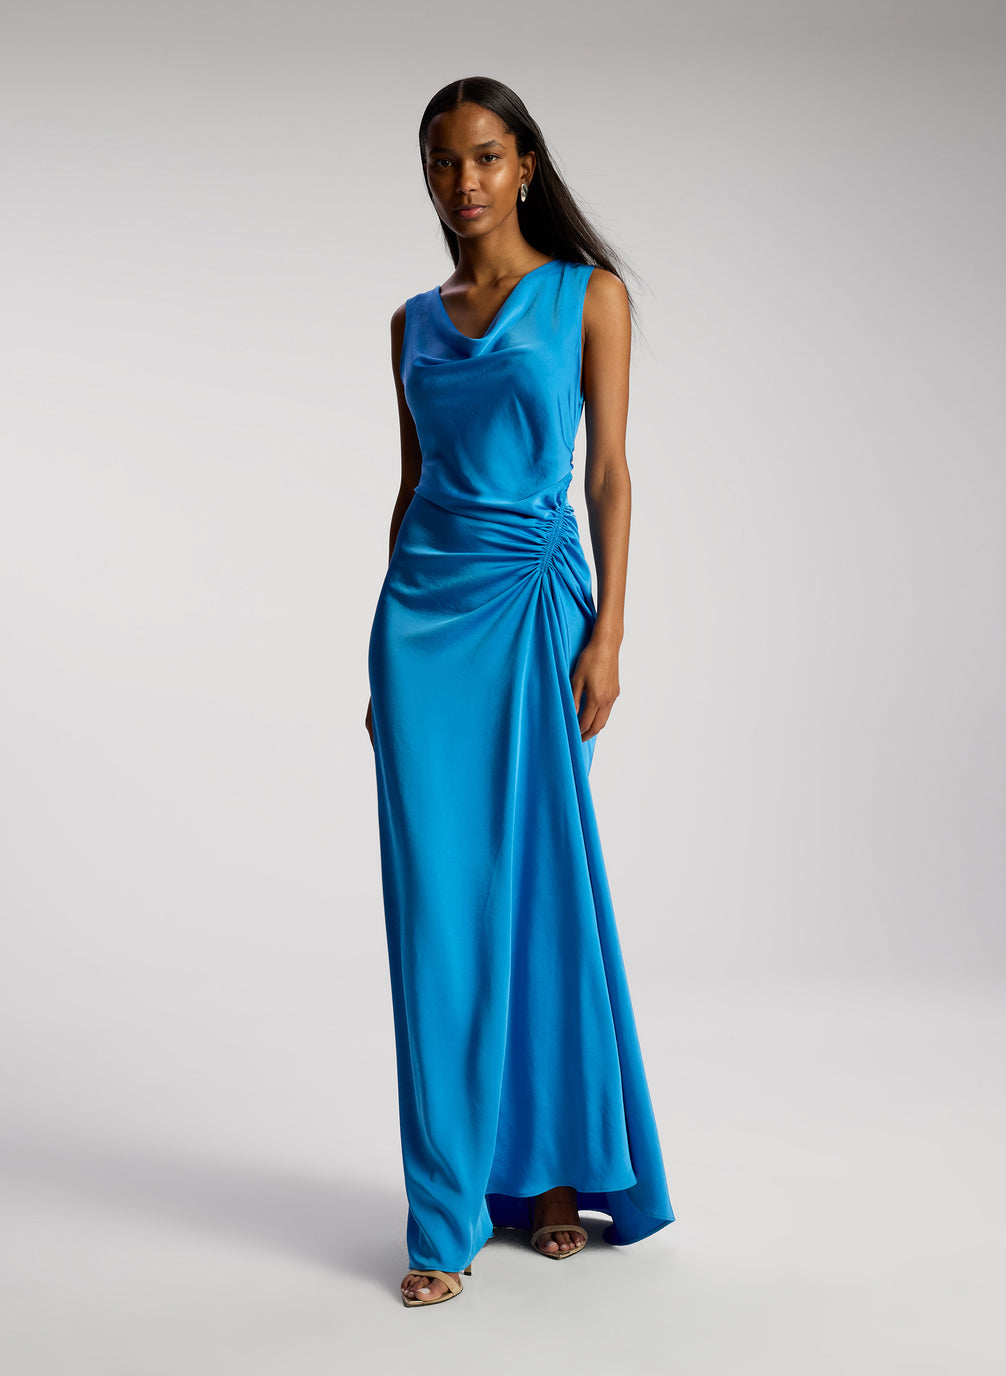 side view of woman wearing blue satin maxi dress